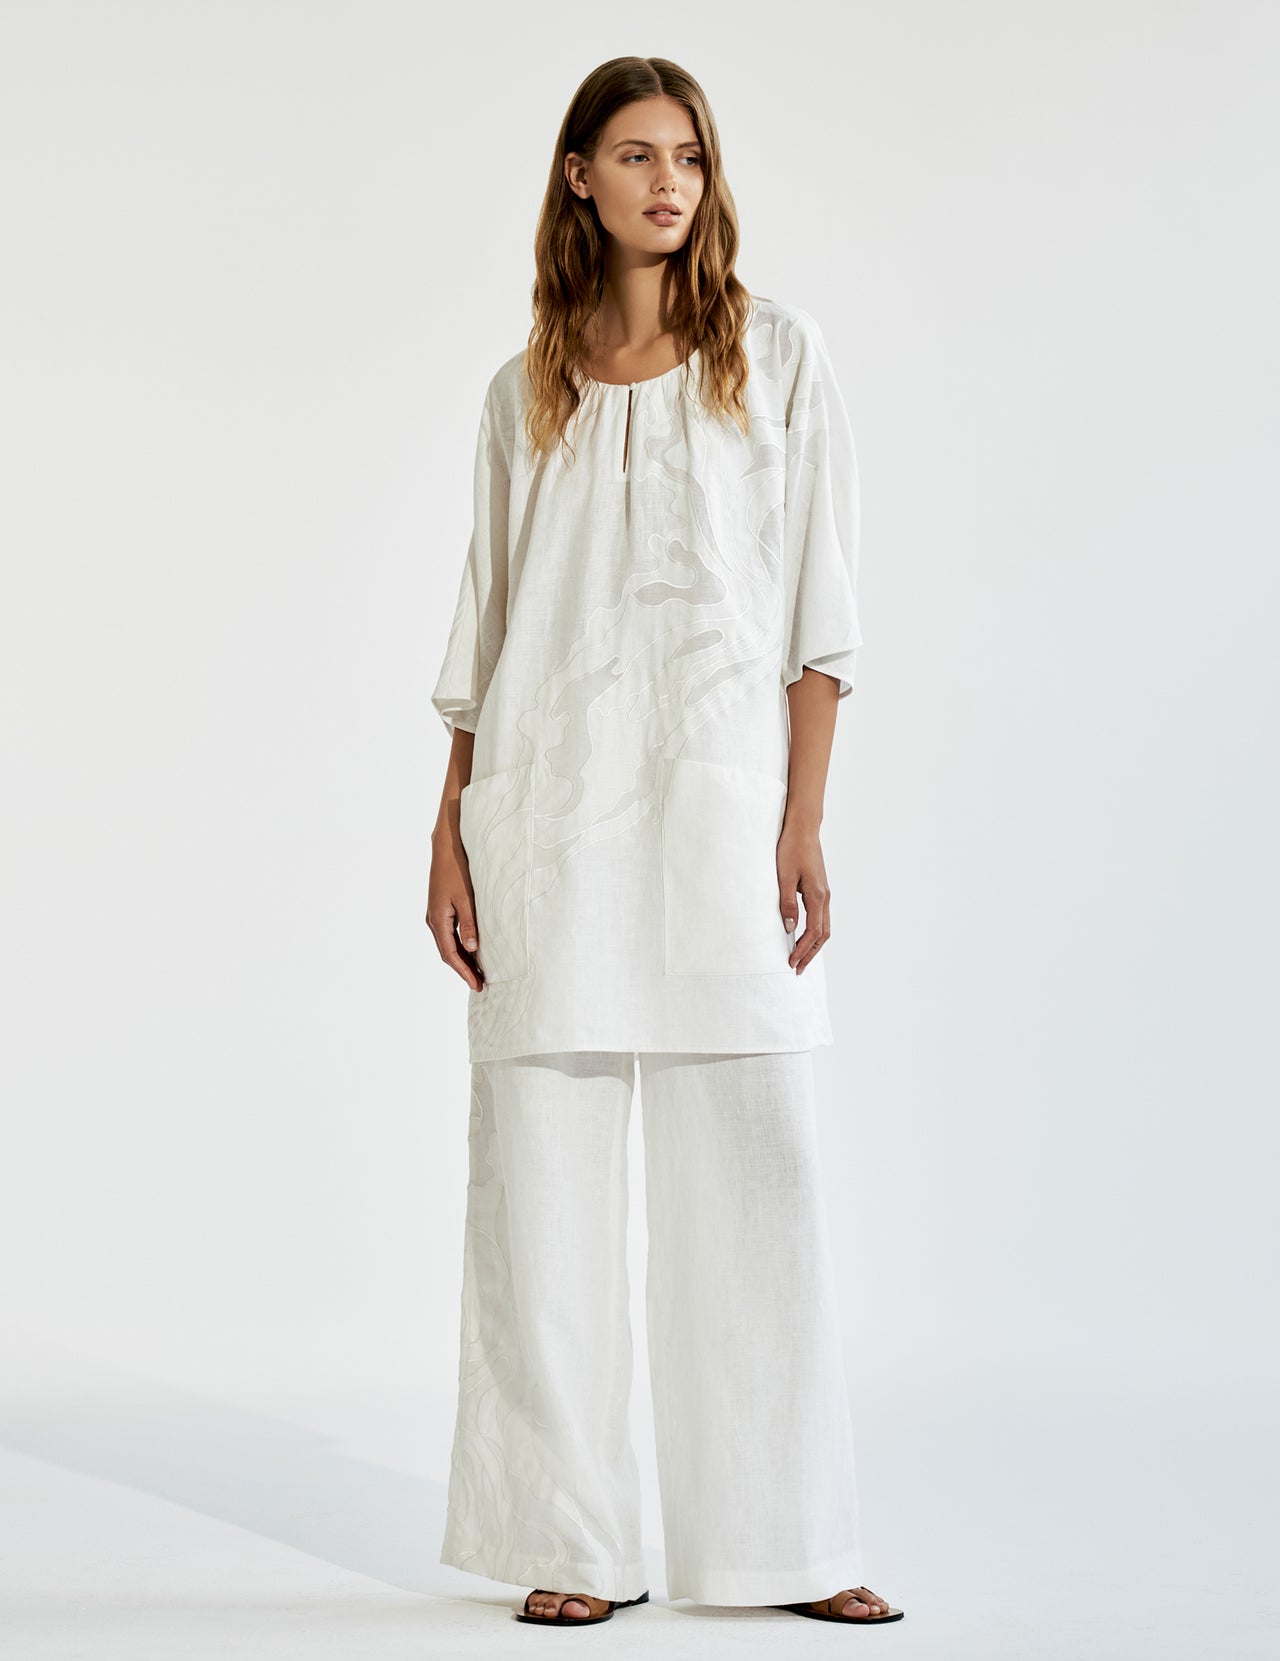  White Linen Short Tunic Dress with Cutwork Appliqué  